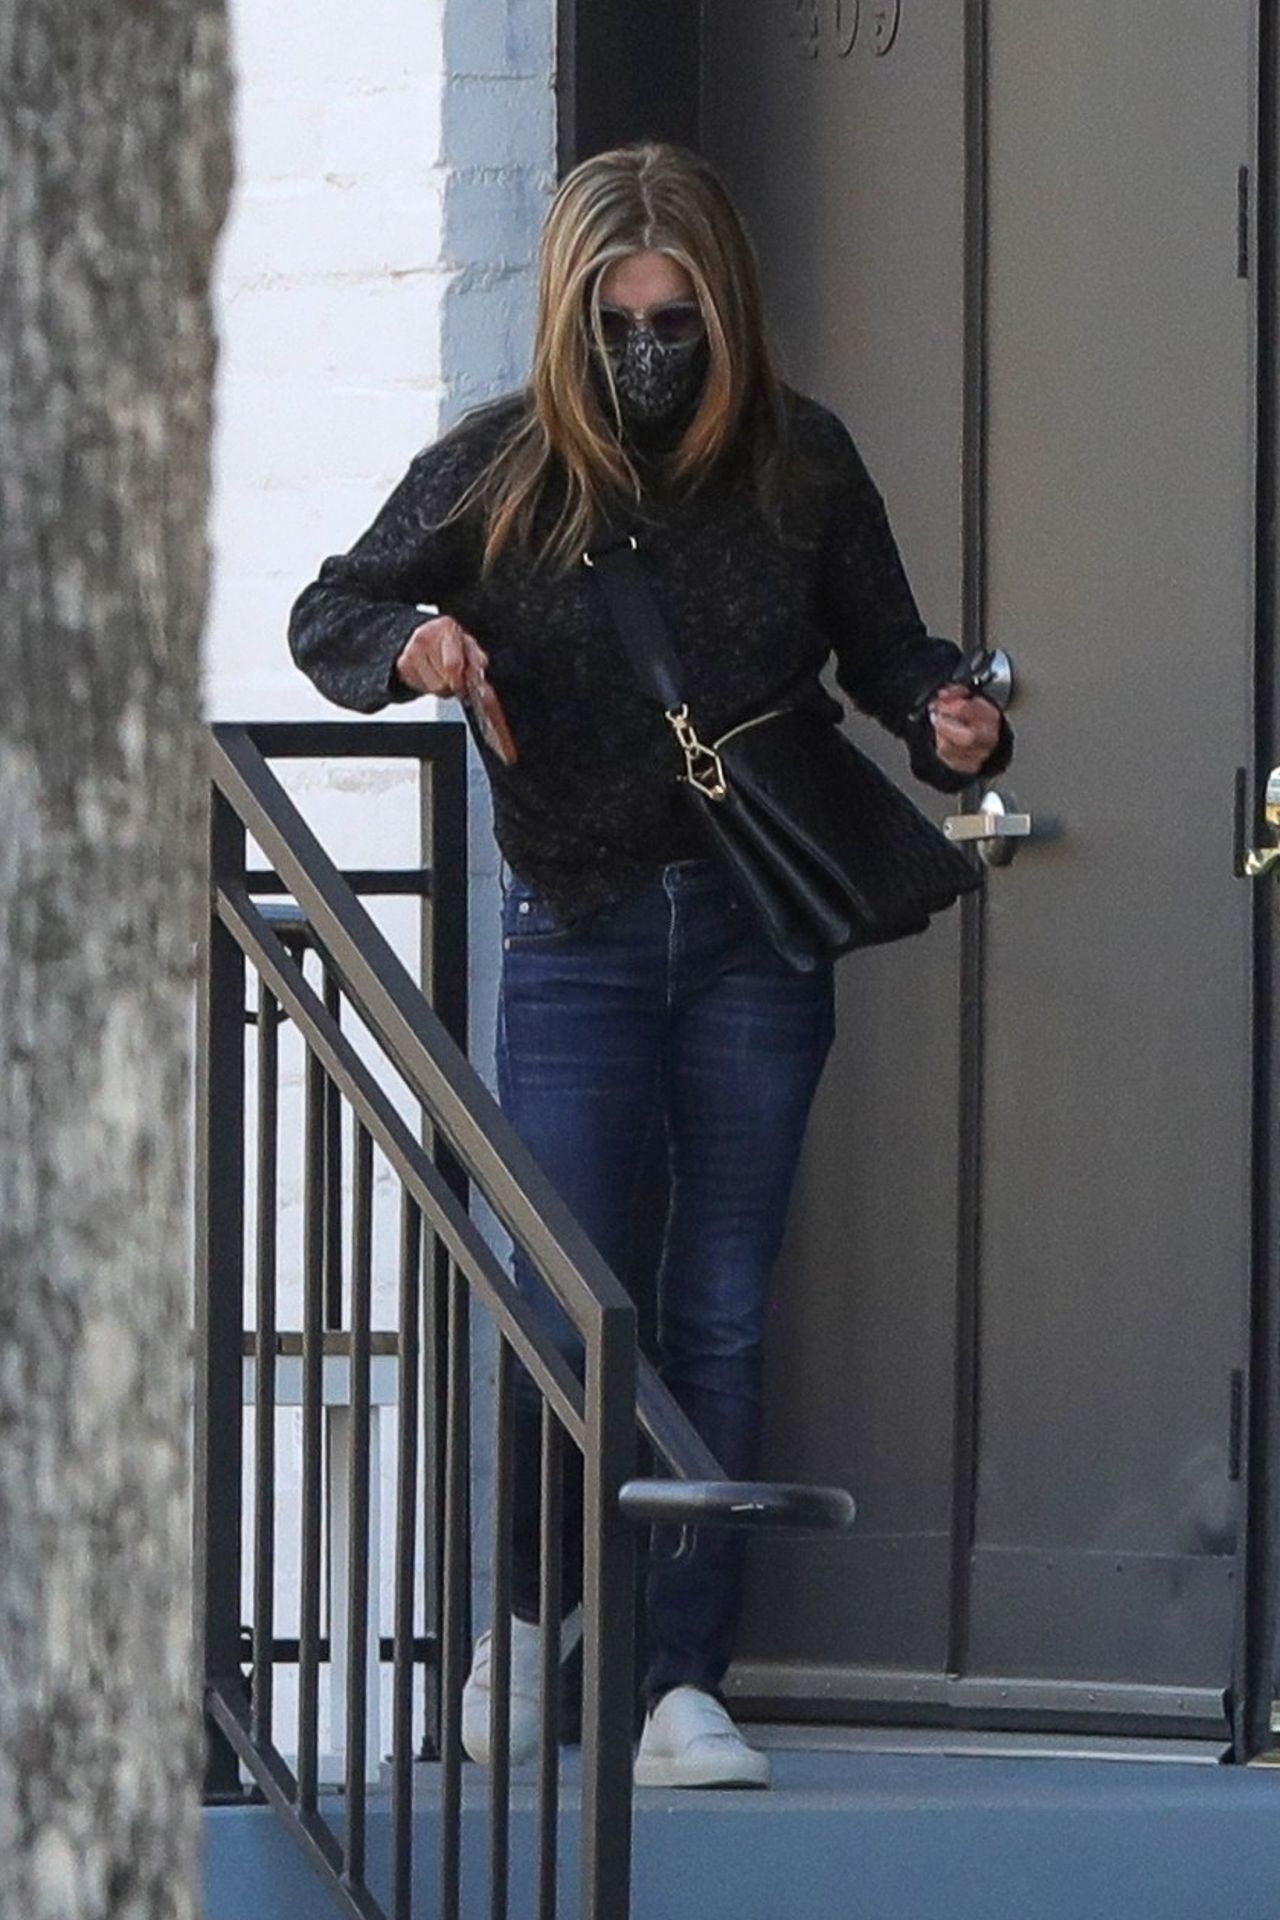 Jennifer Aniston Wears Black Sweater With Jeans at Hair Salon in LA